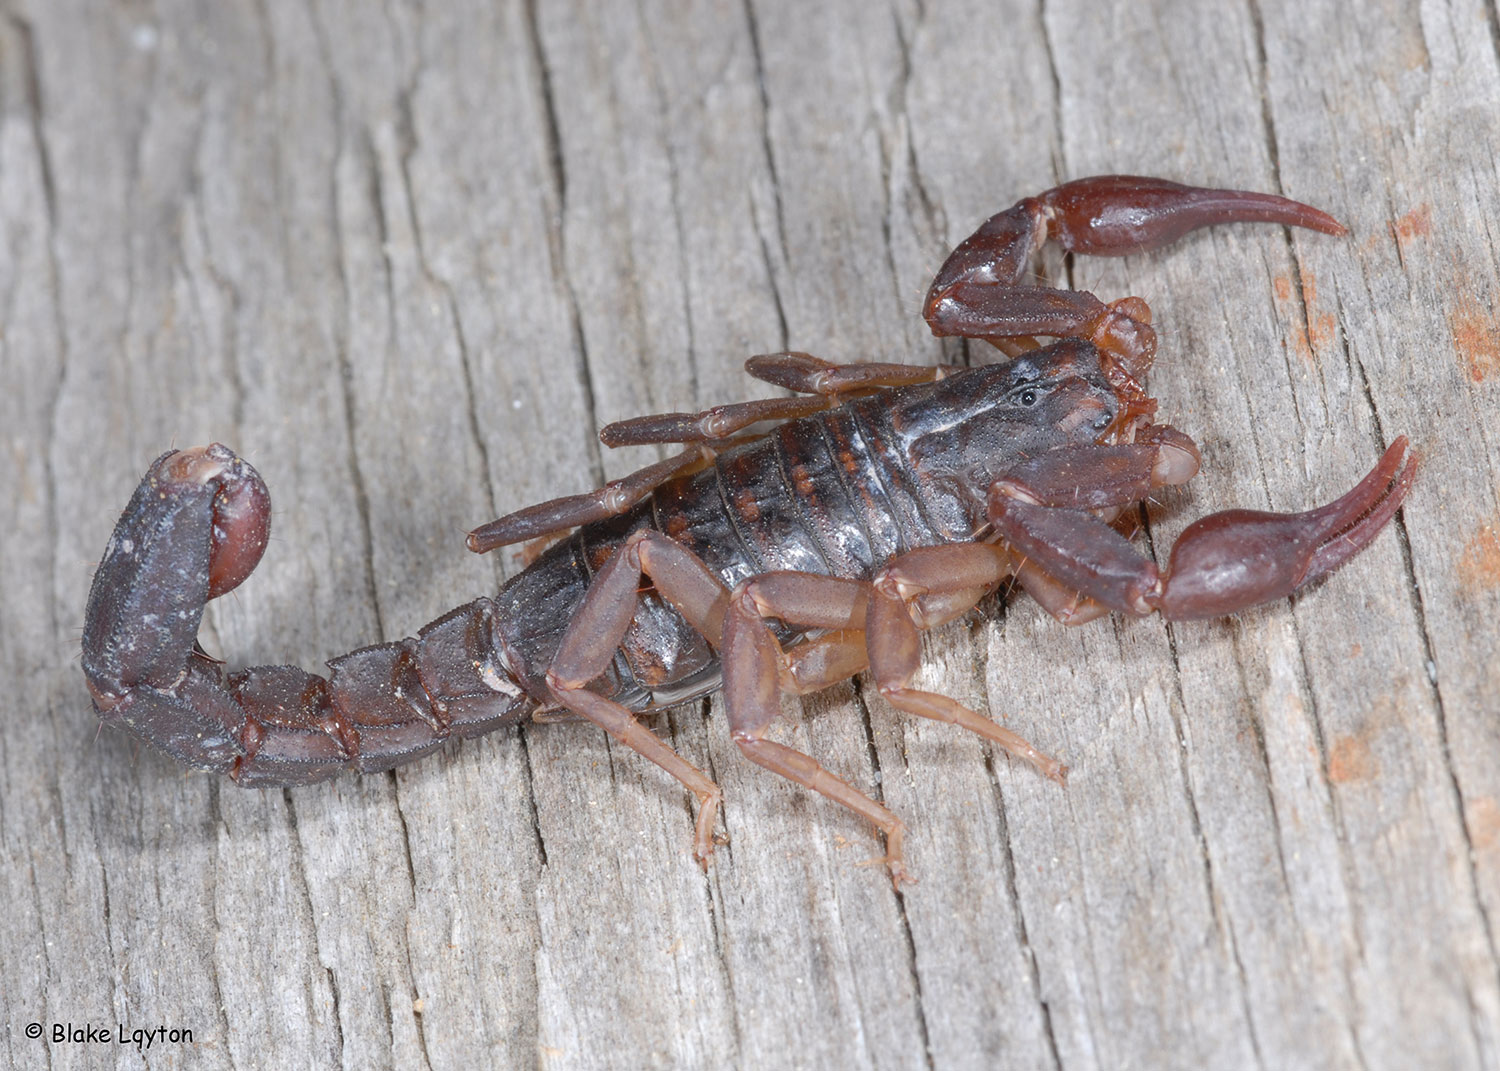 A Southern Devil Scorpion on a plank of wood.